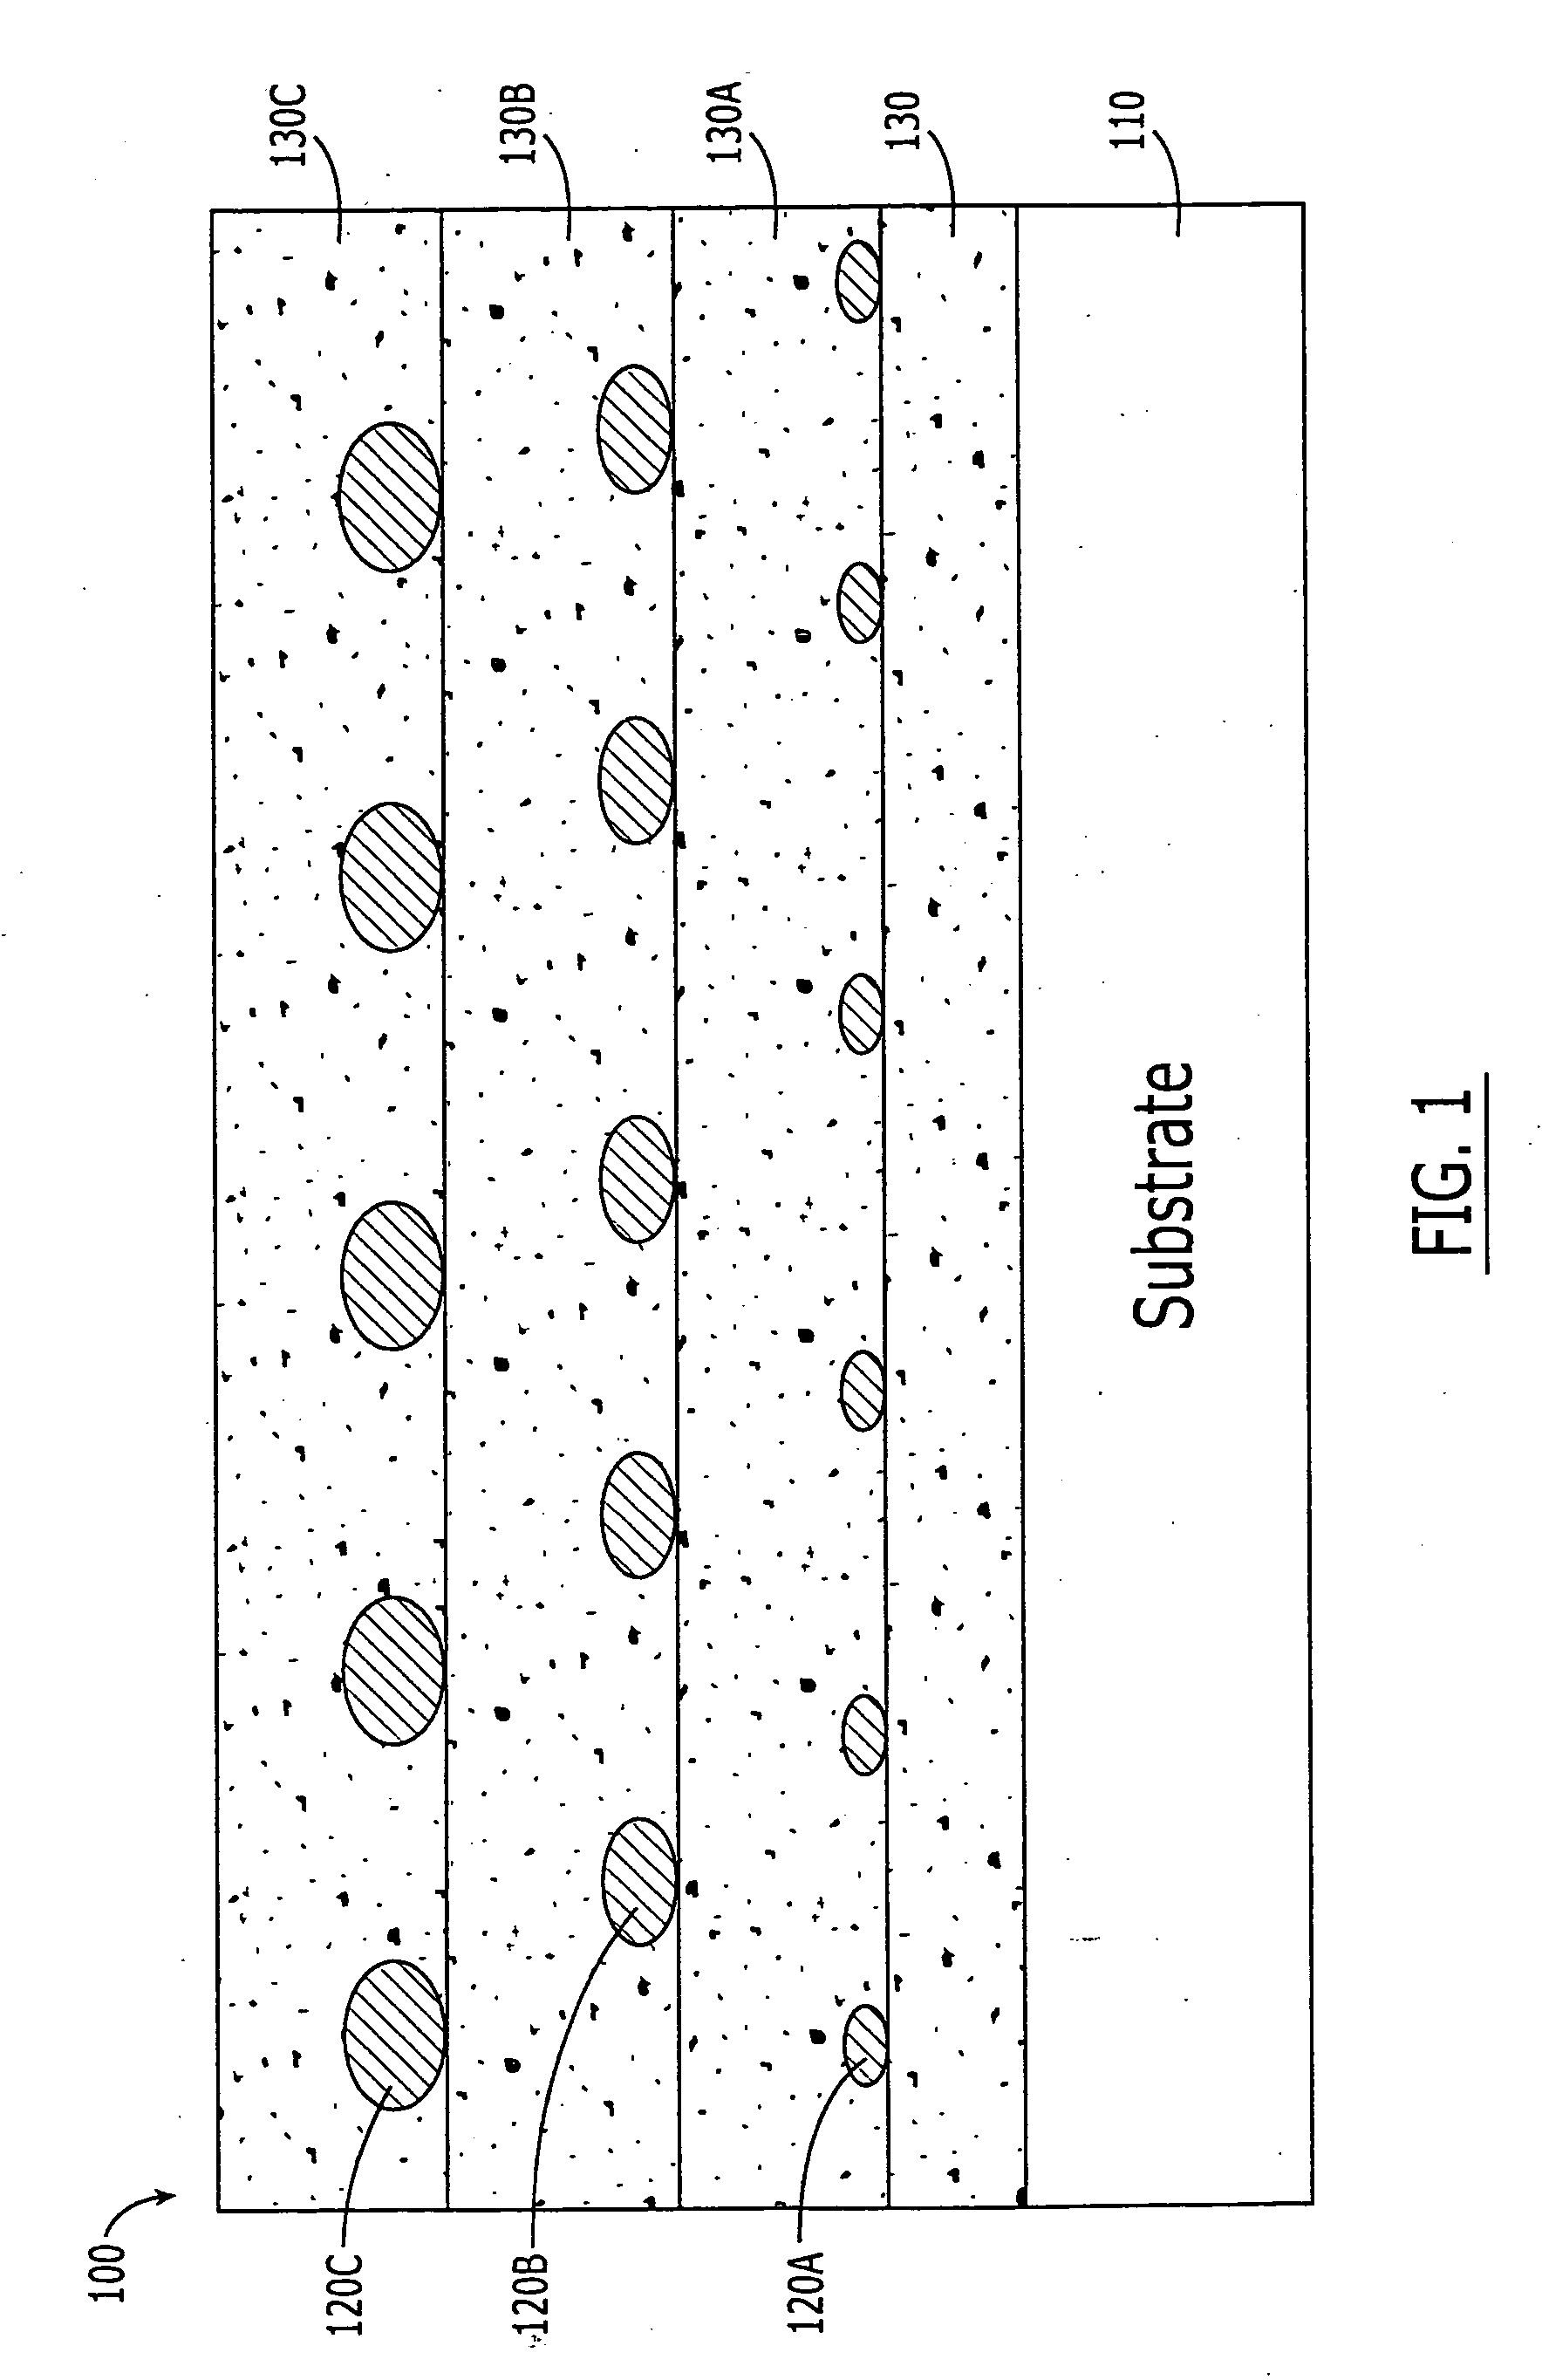 Methods of forming three-dimensional nanodot arrays in a matrix